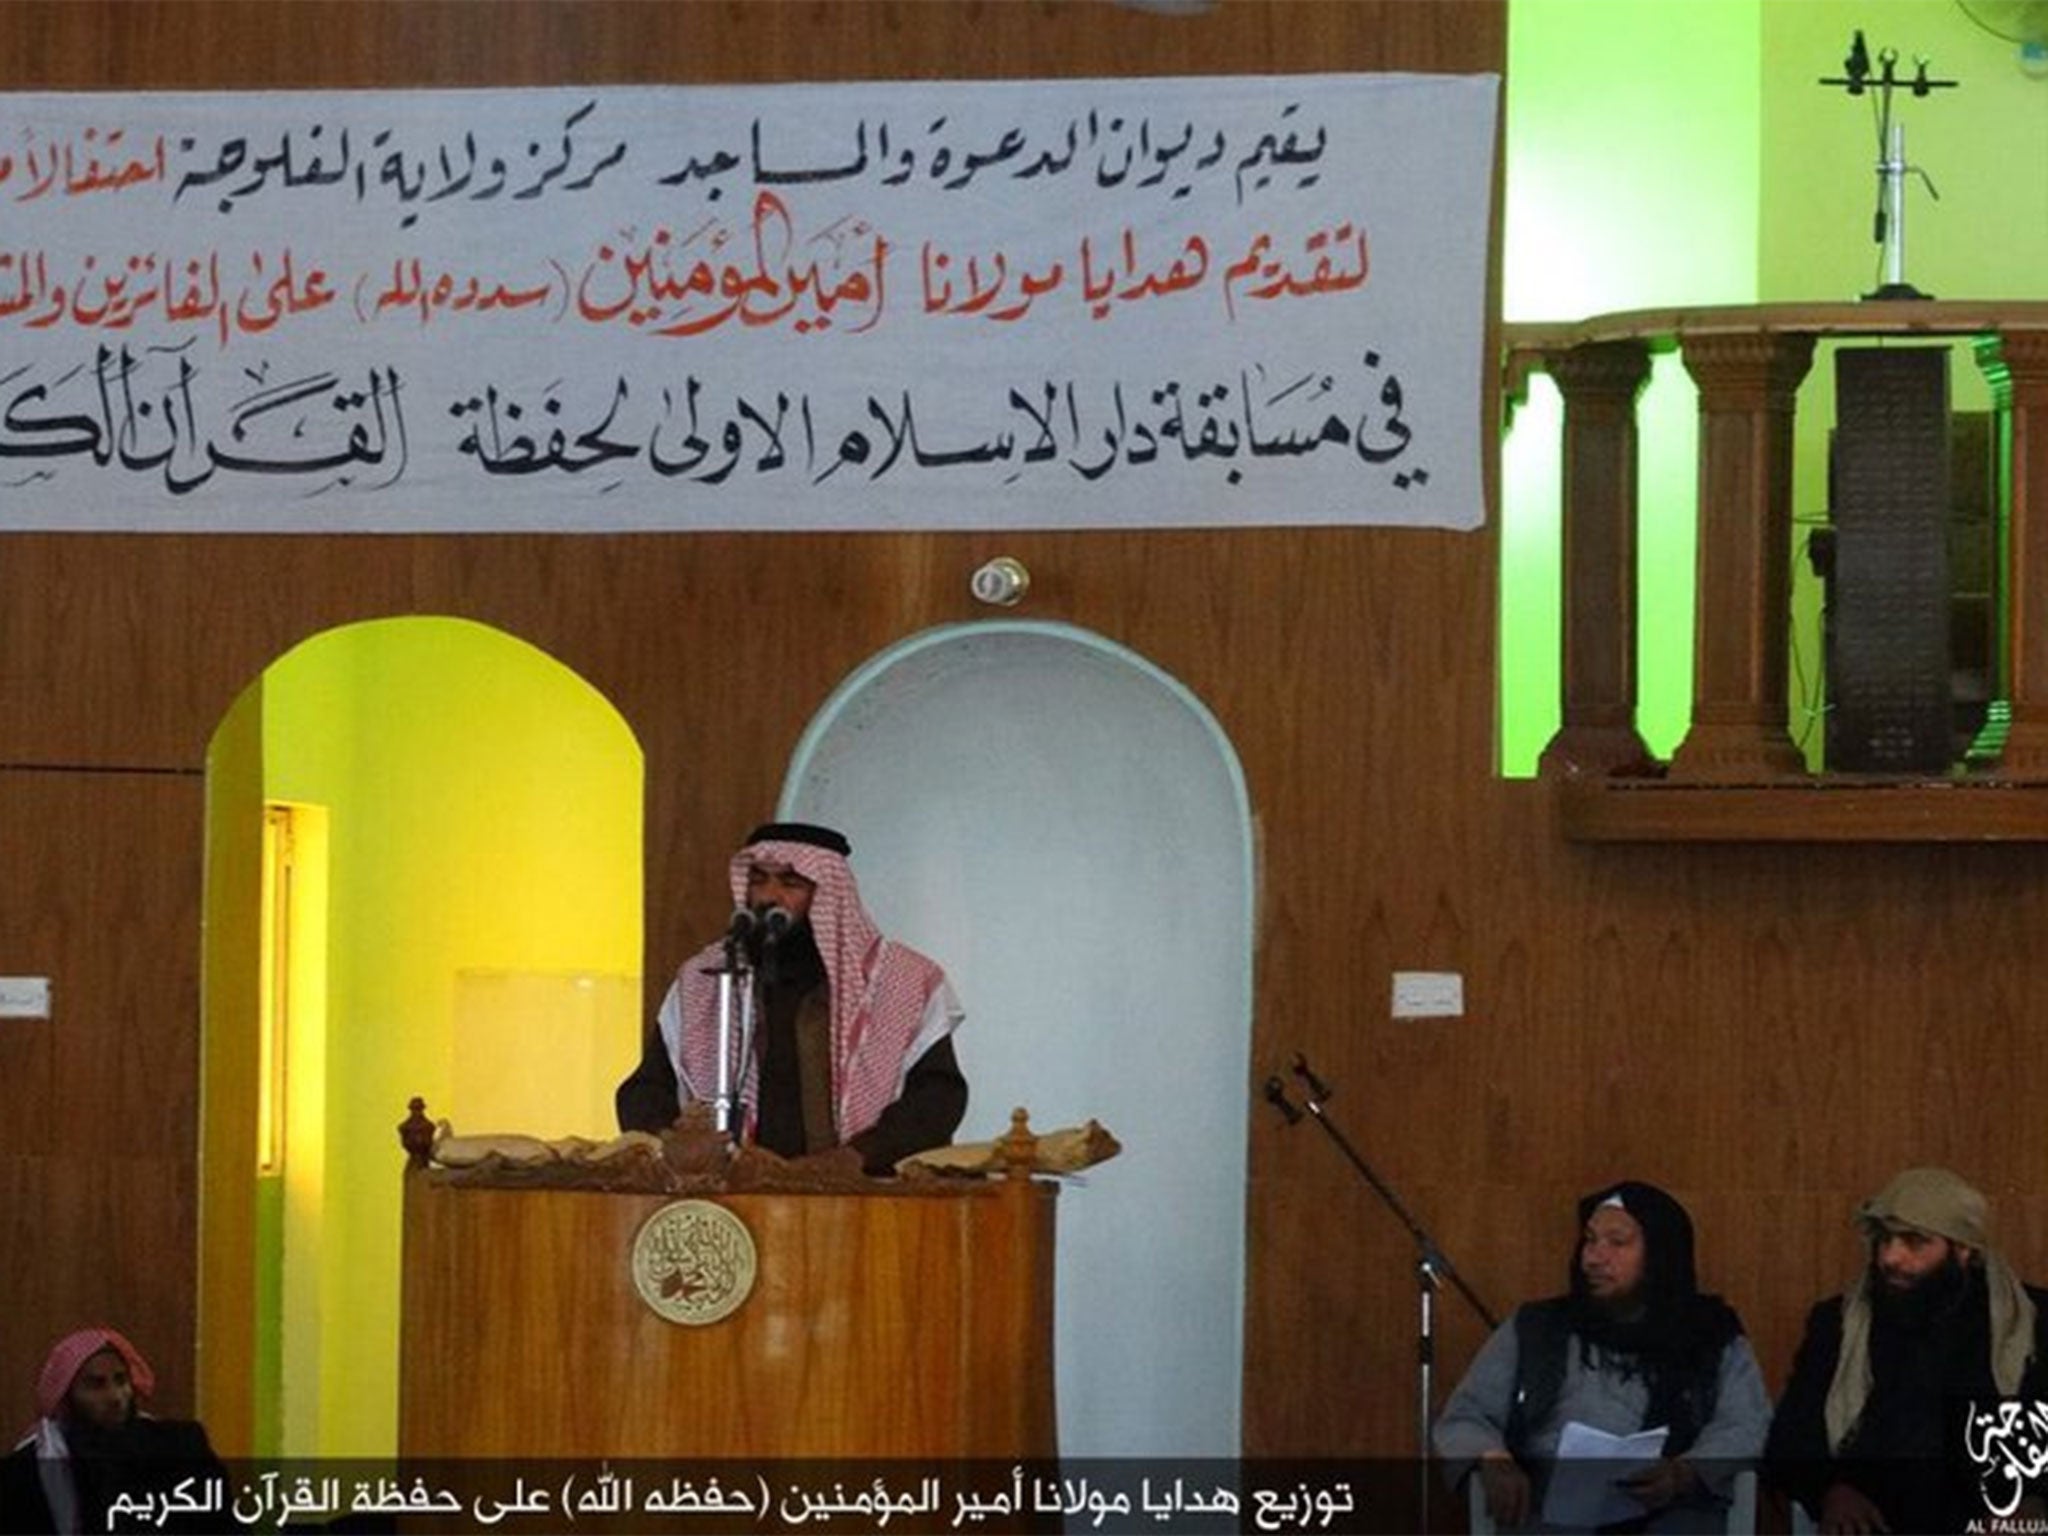 New images purport to show the Isis leader Abu Bakr al-Baghdadi